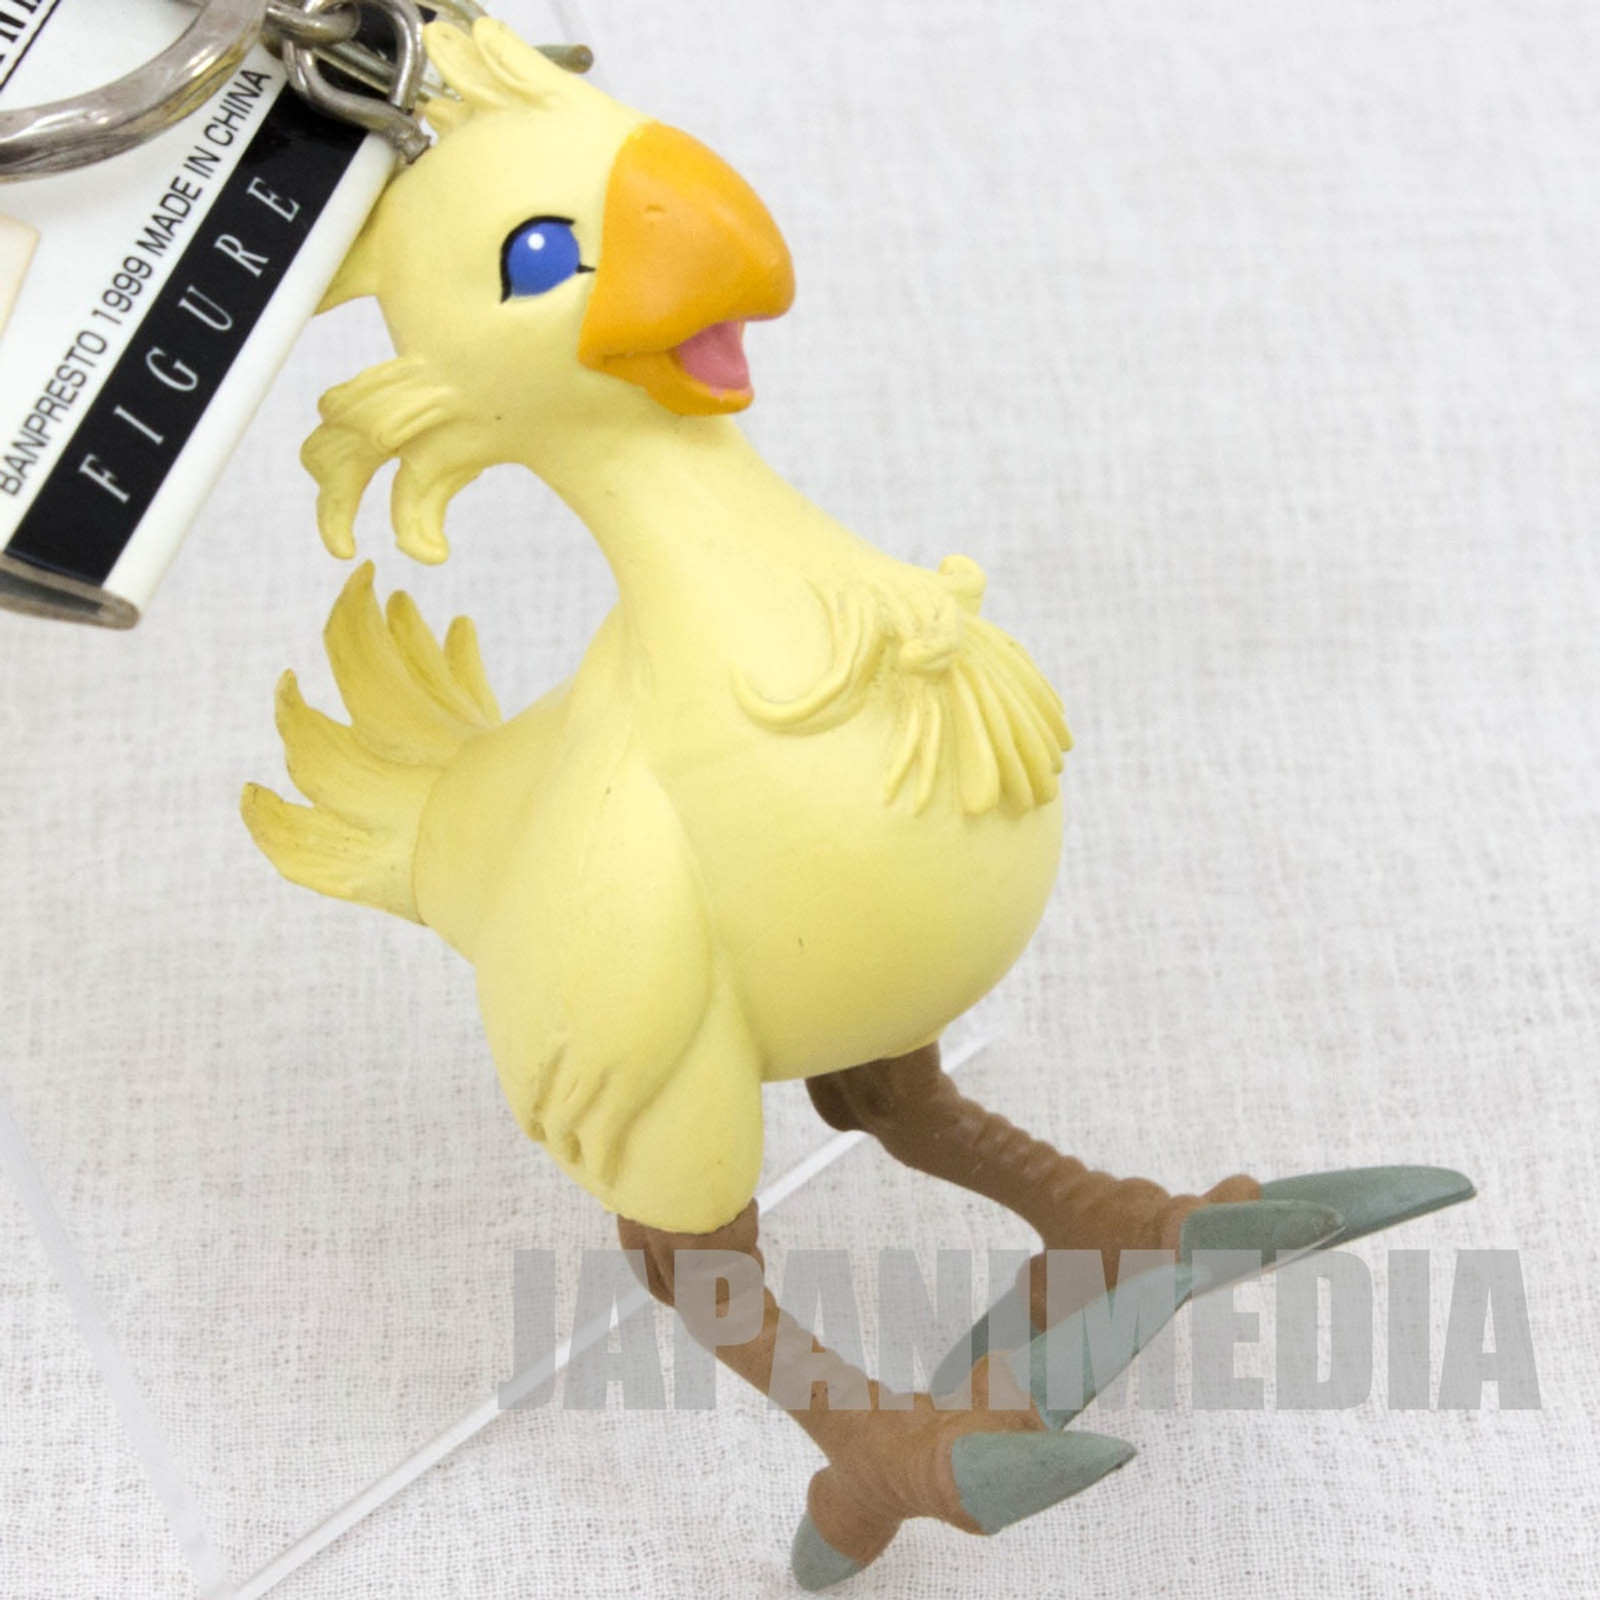 Final Fantasy VIII 8 Chocobo Figure Key Chain Banpresto JAPAN SUARE ENIX